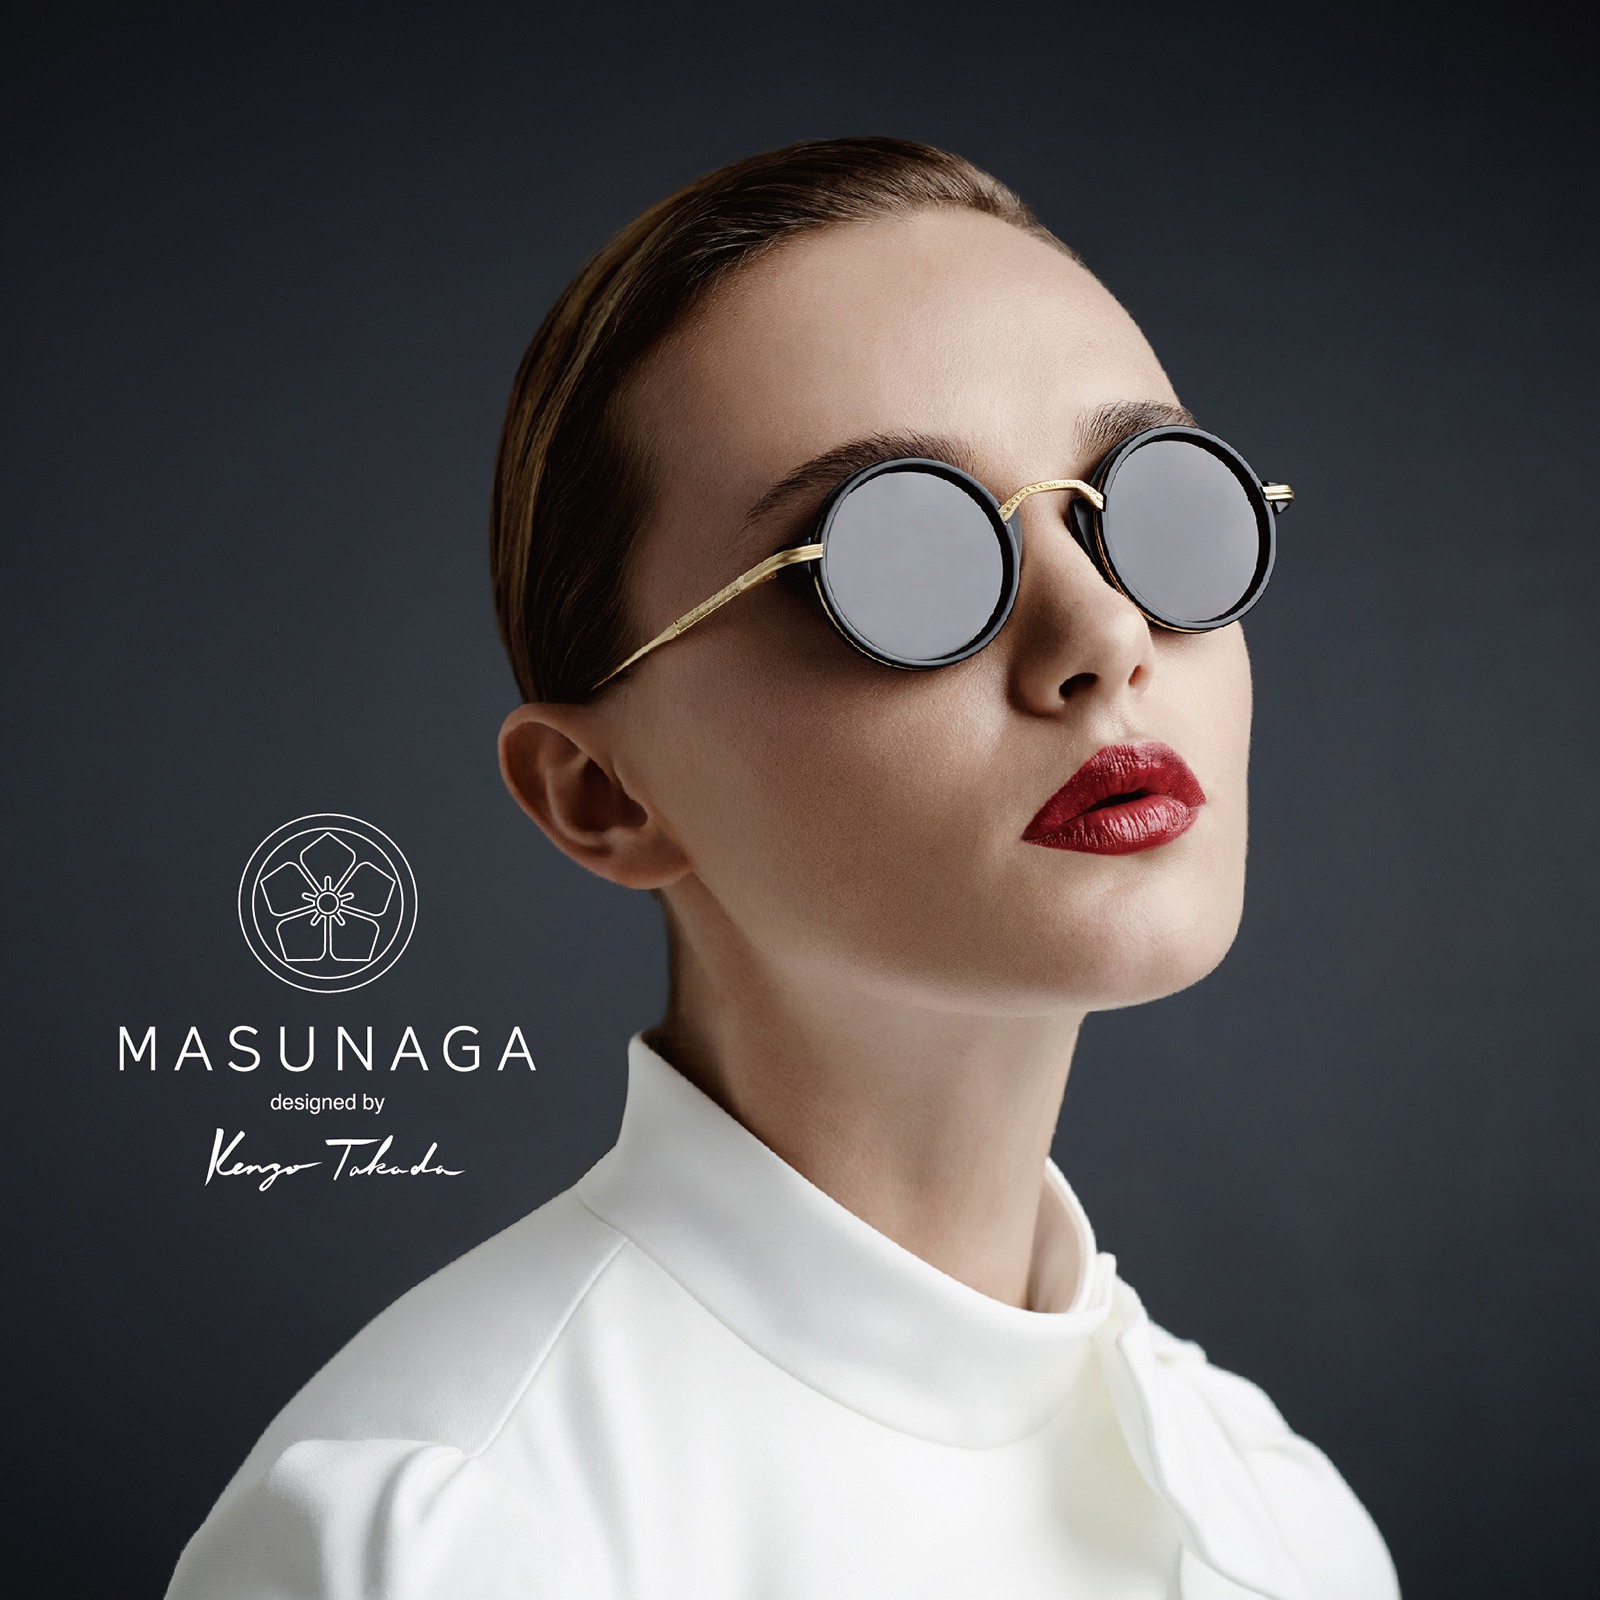 MASUNAGA designed by Kenzo Takada official